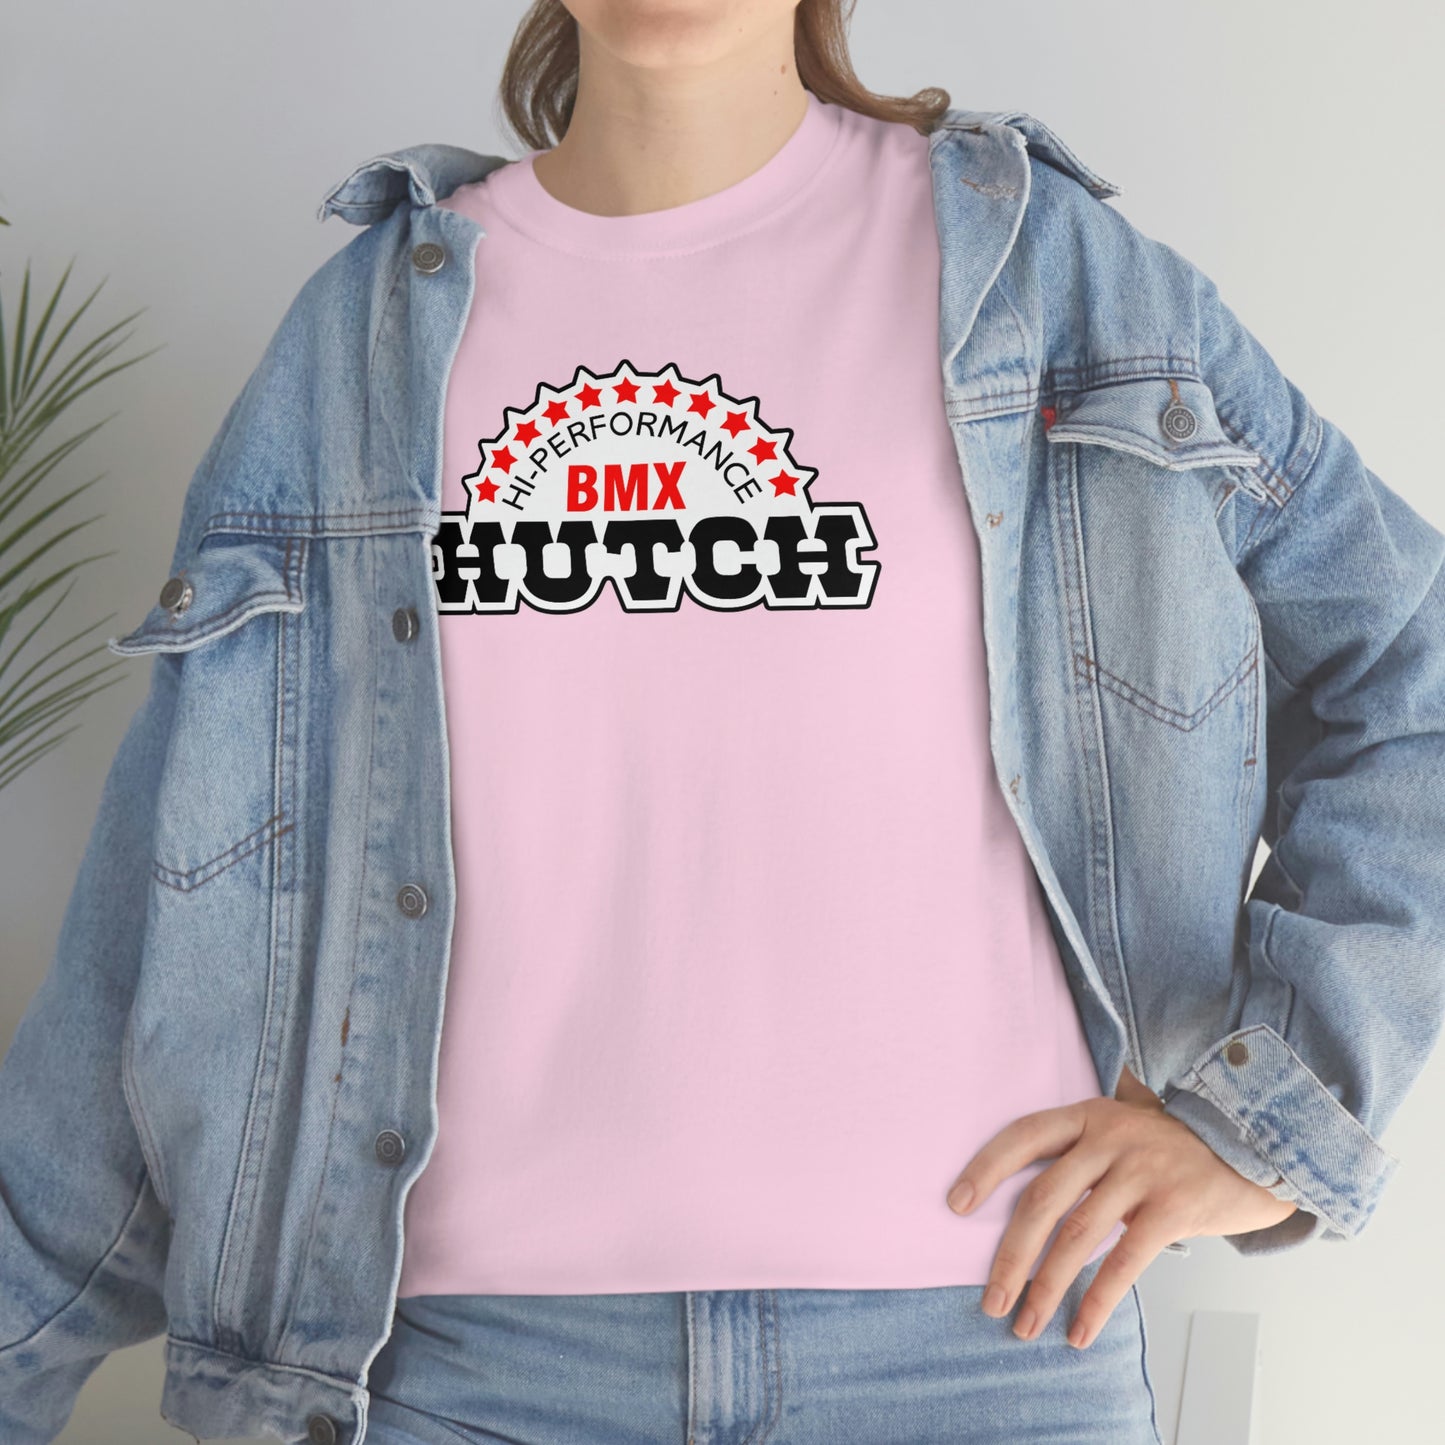 Hutch T-Shirt